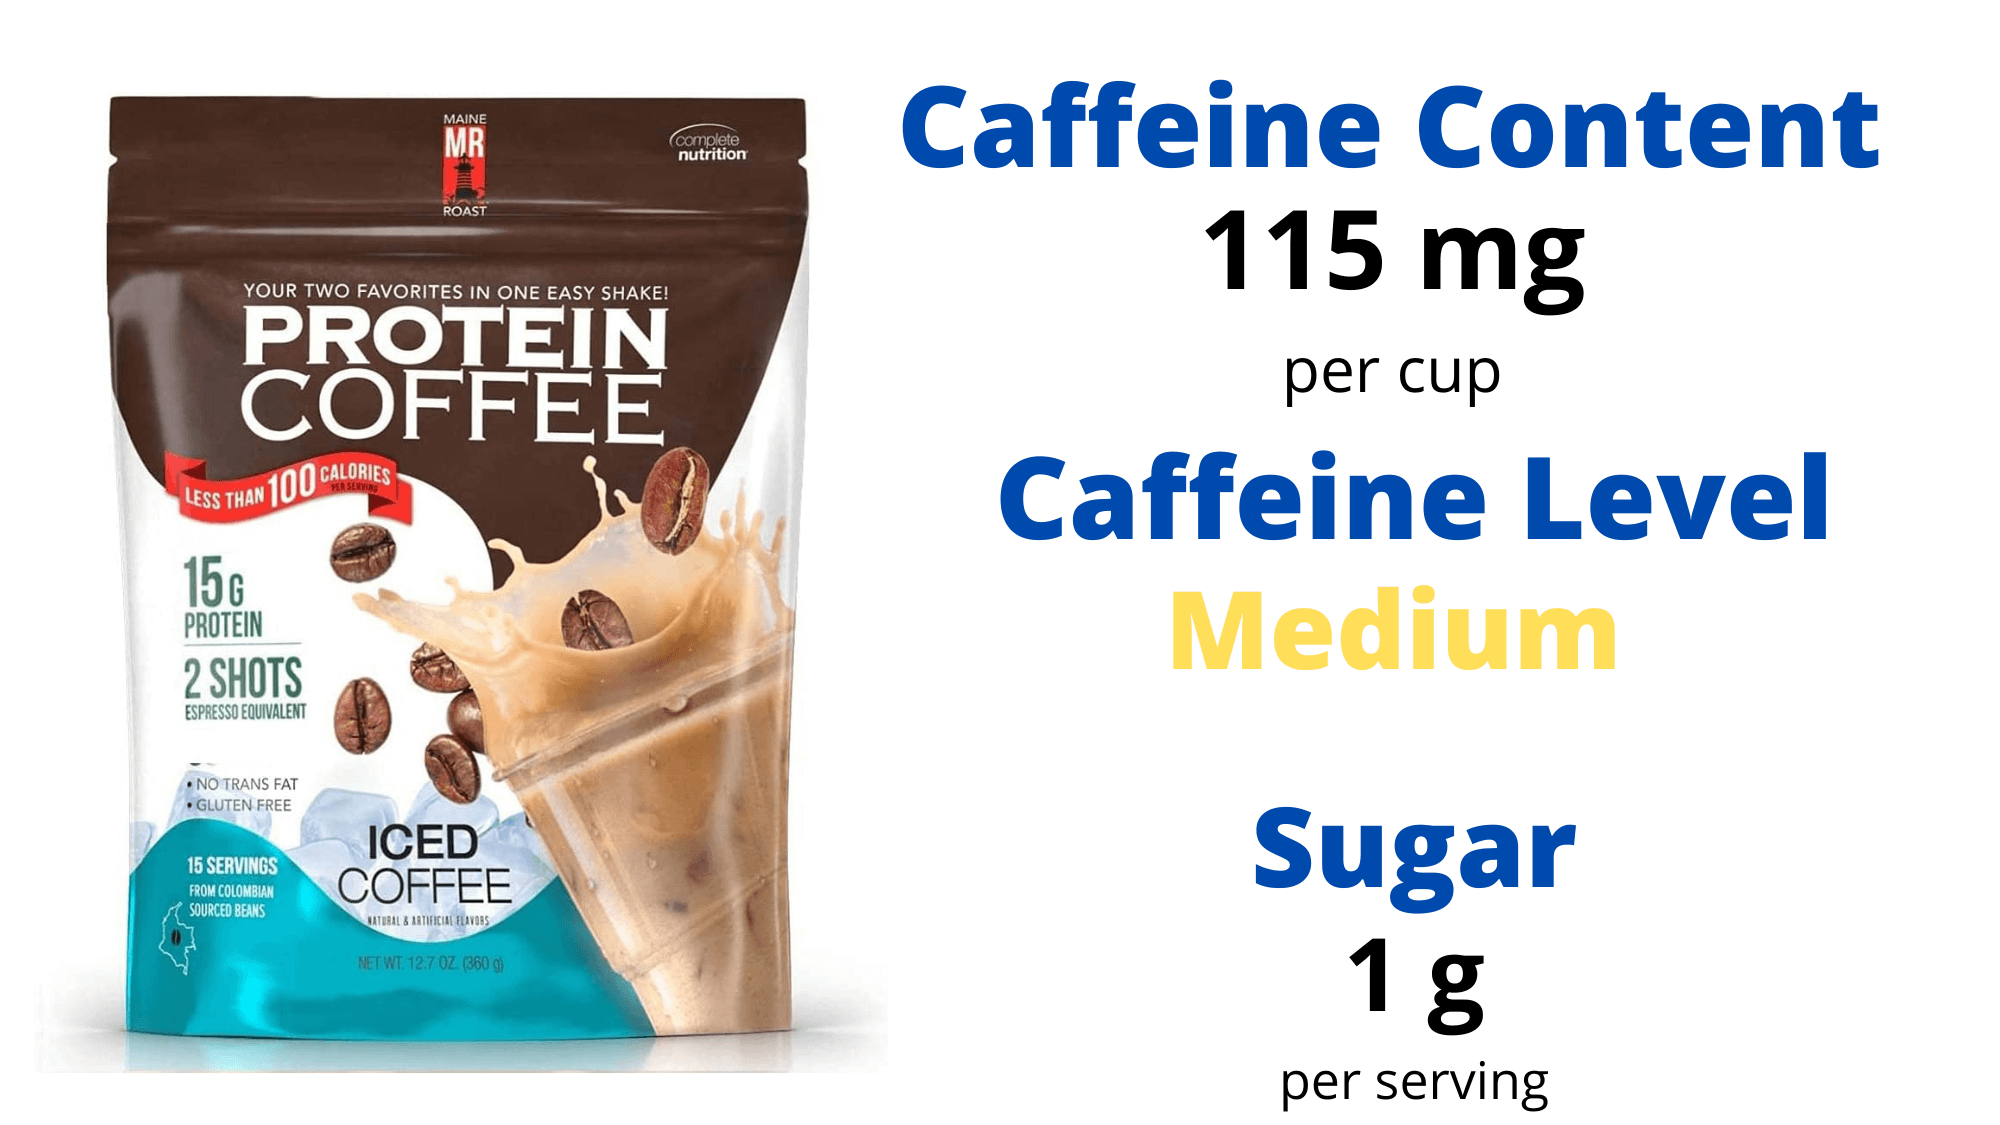 Caffeine Content of Maine Roast Protein Coffee